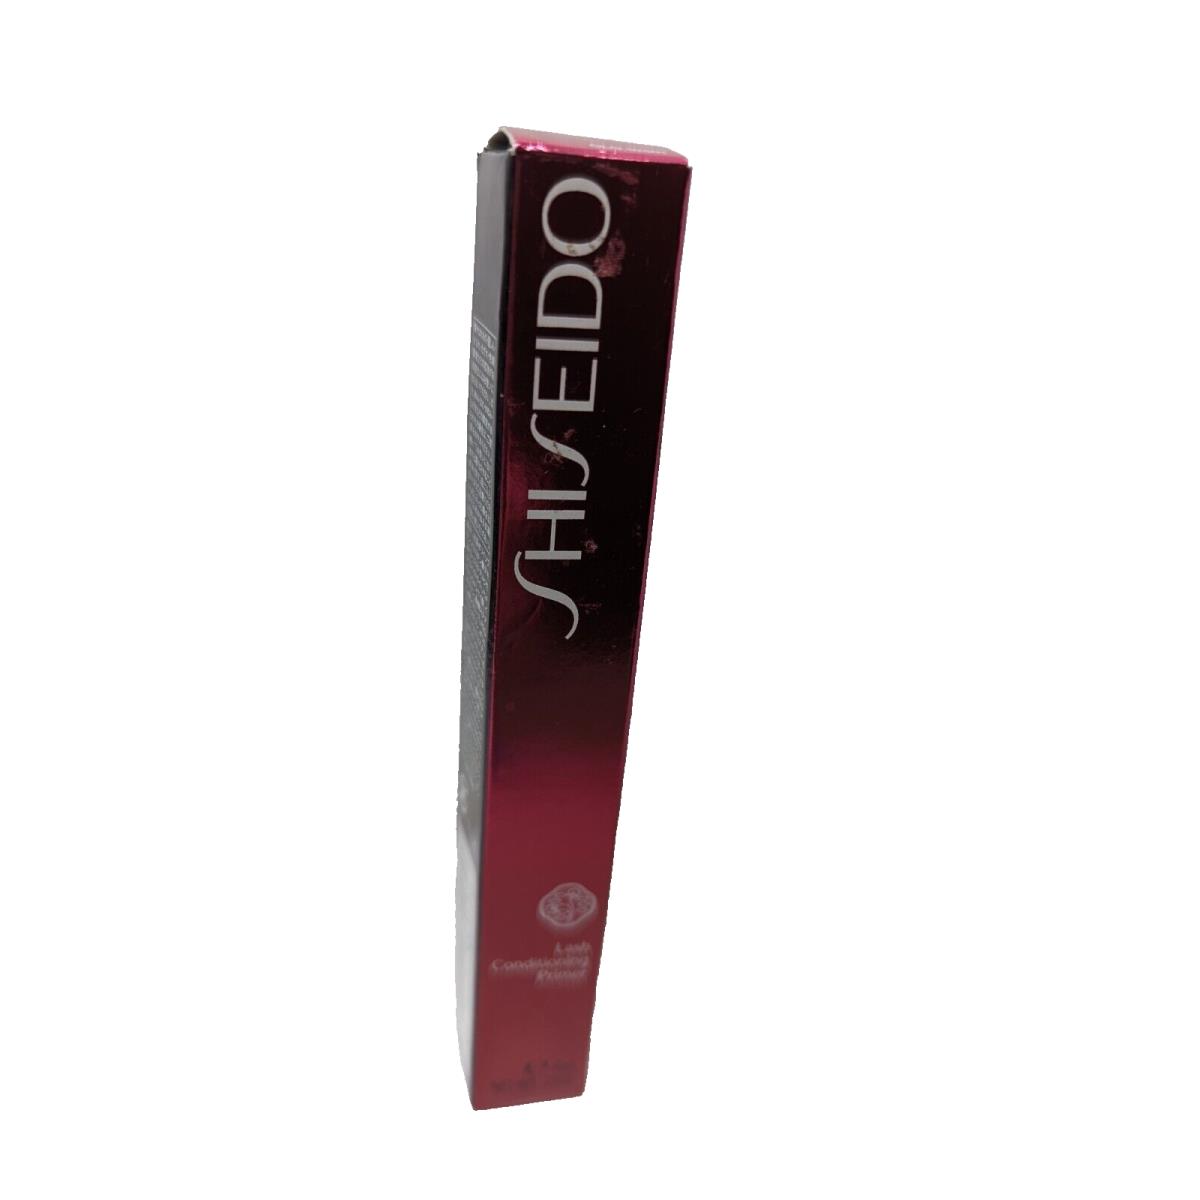 Shiseido Lash Conditioning Primer GLO.10501